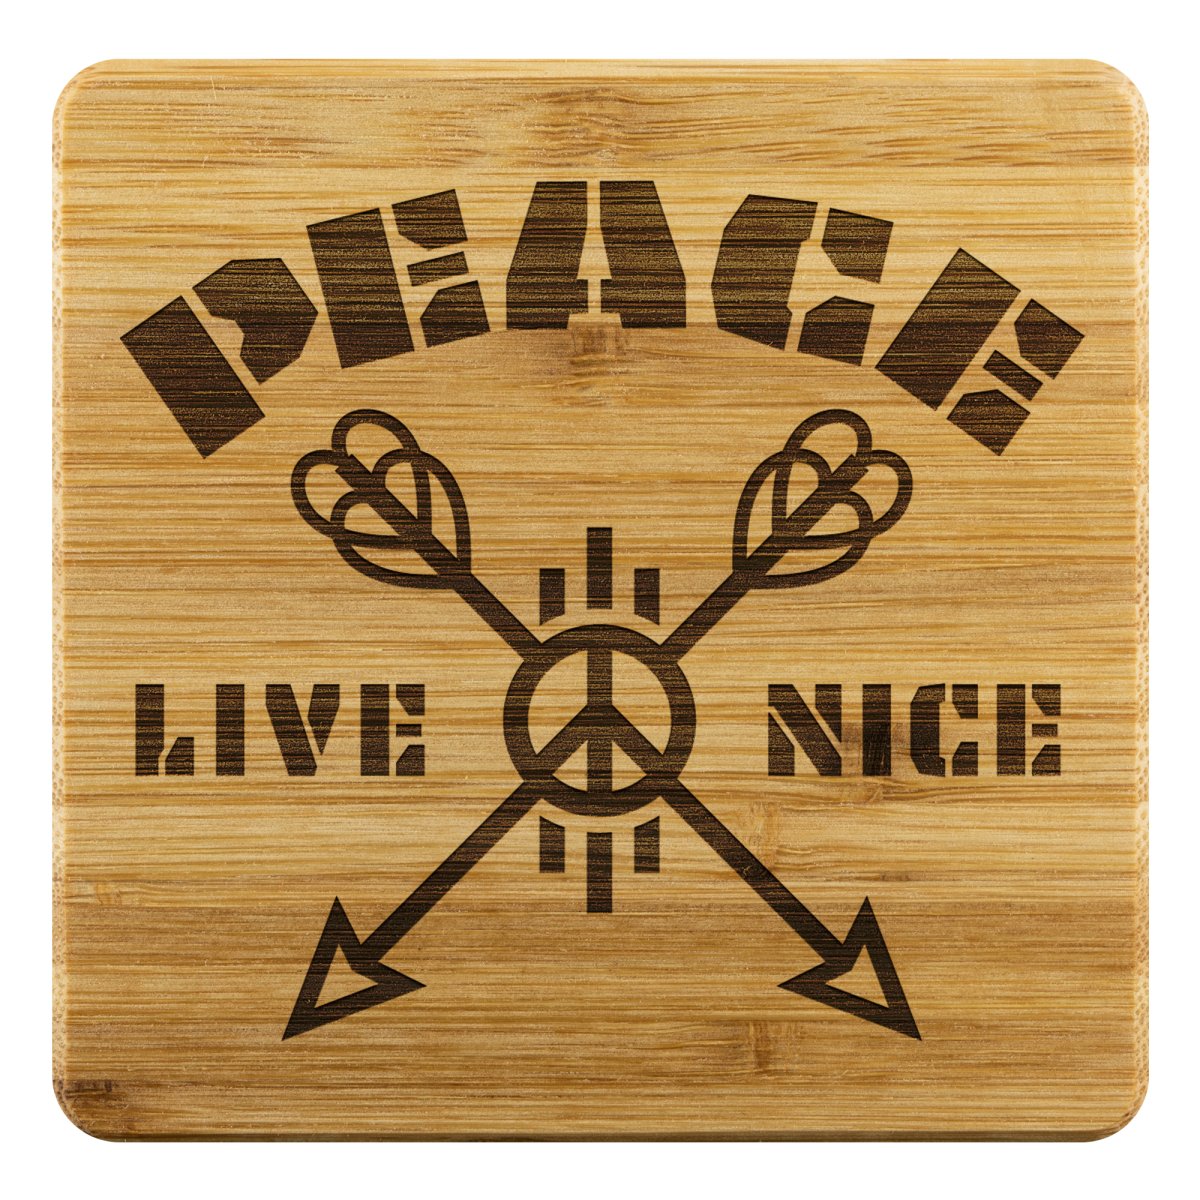 Peace Live Nice - Bamboo Coasters